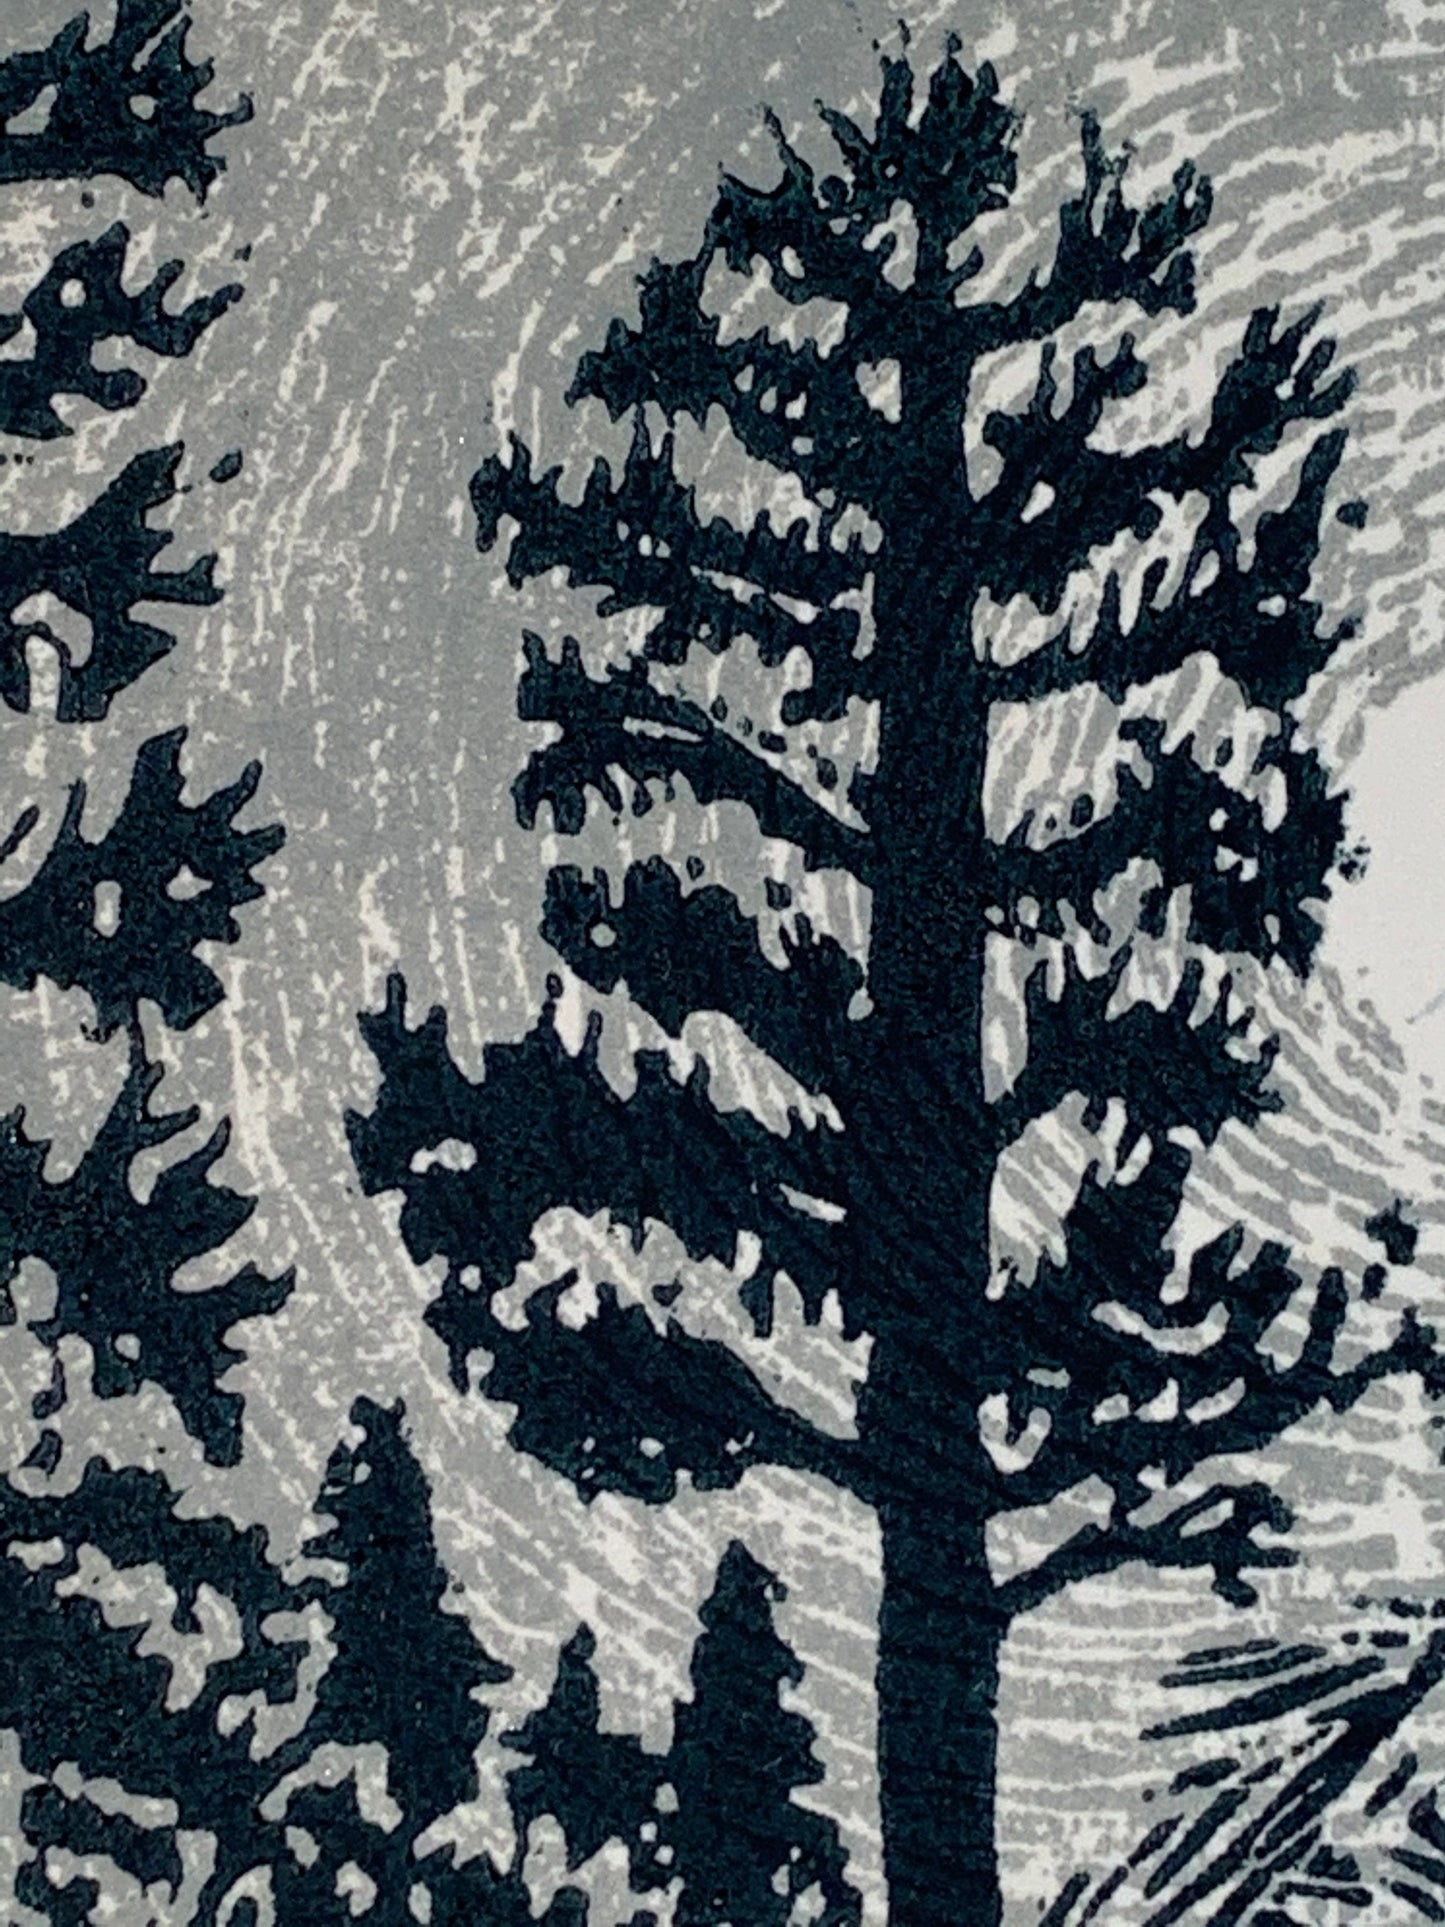 Original Woodcut Print Night Pine Trees Silver Moon Light All is Bright